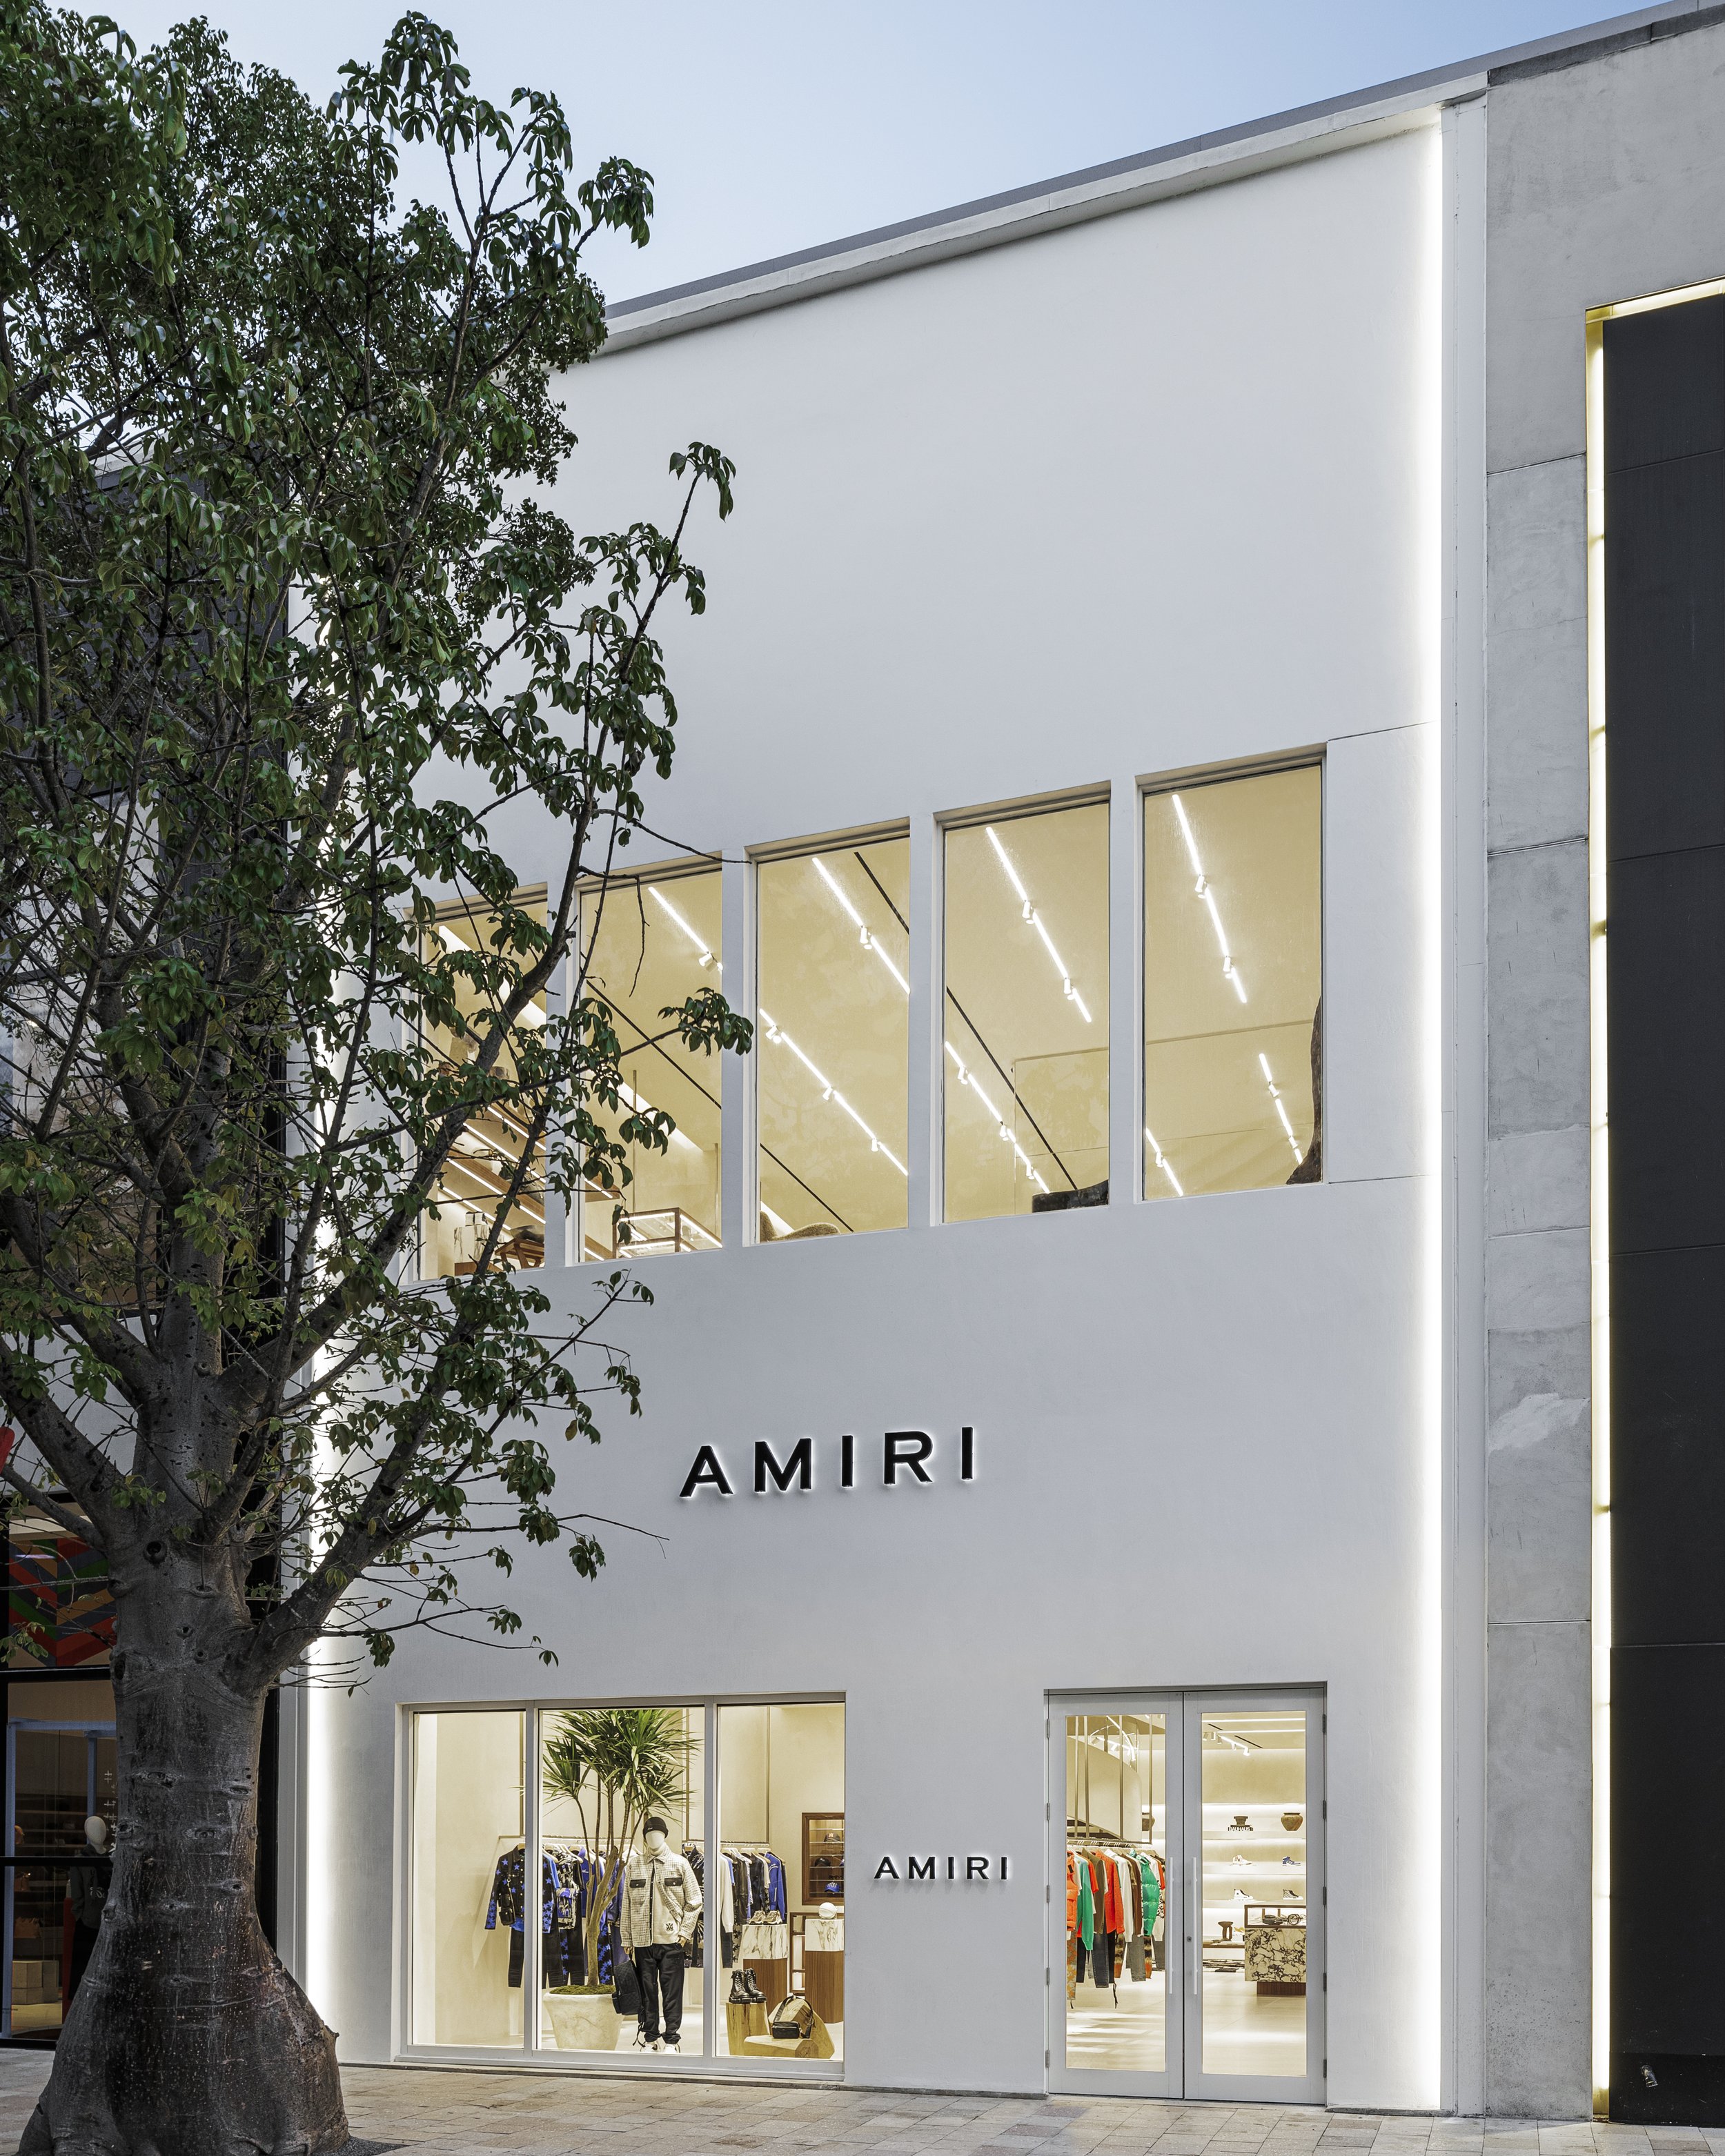 Ralph Lauren Opens Luxury Flagship in Miami Design District